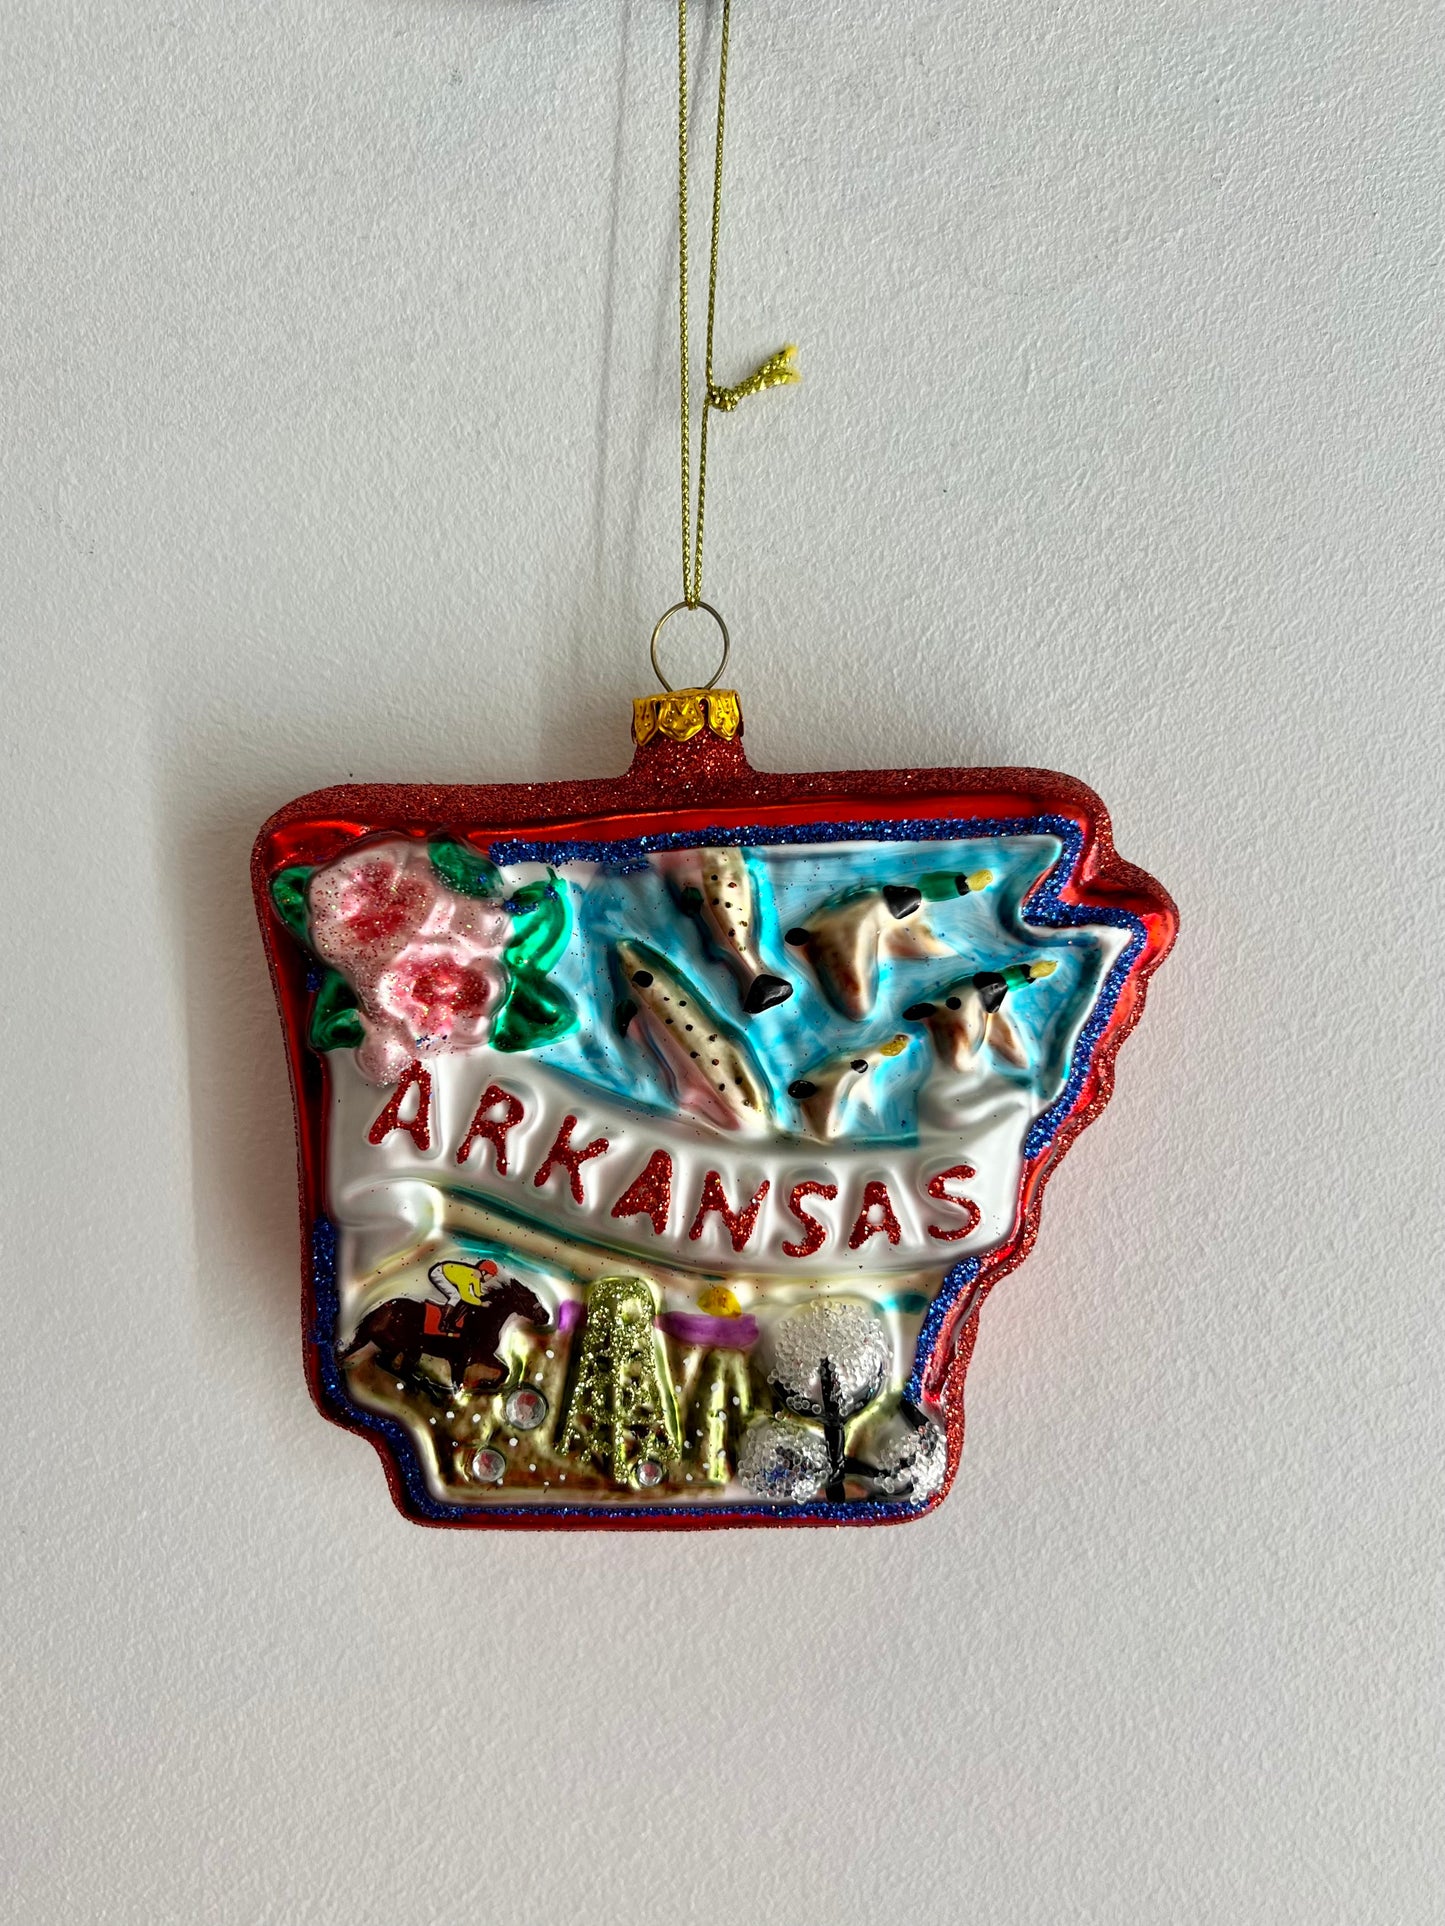 Arkansas Ornament